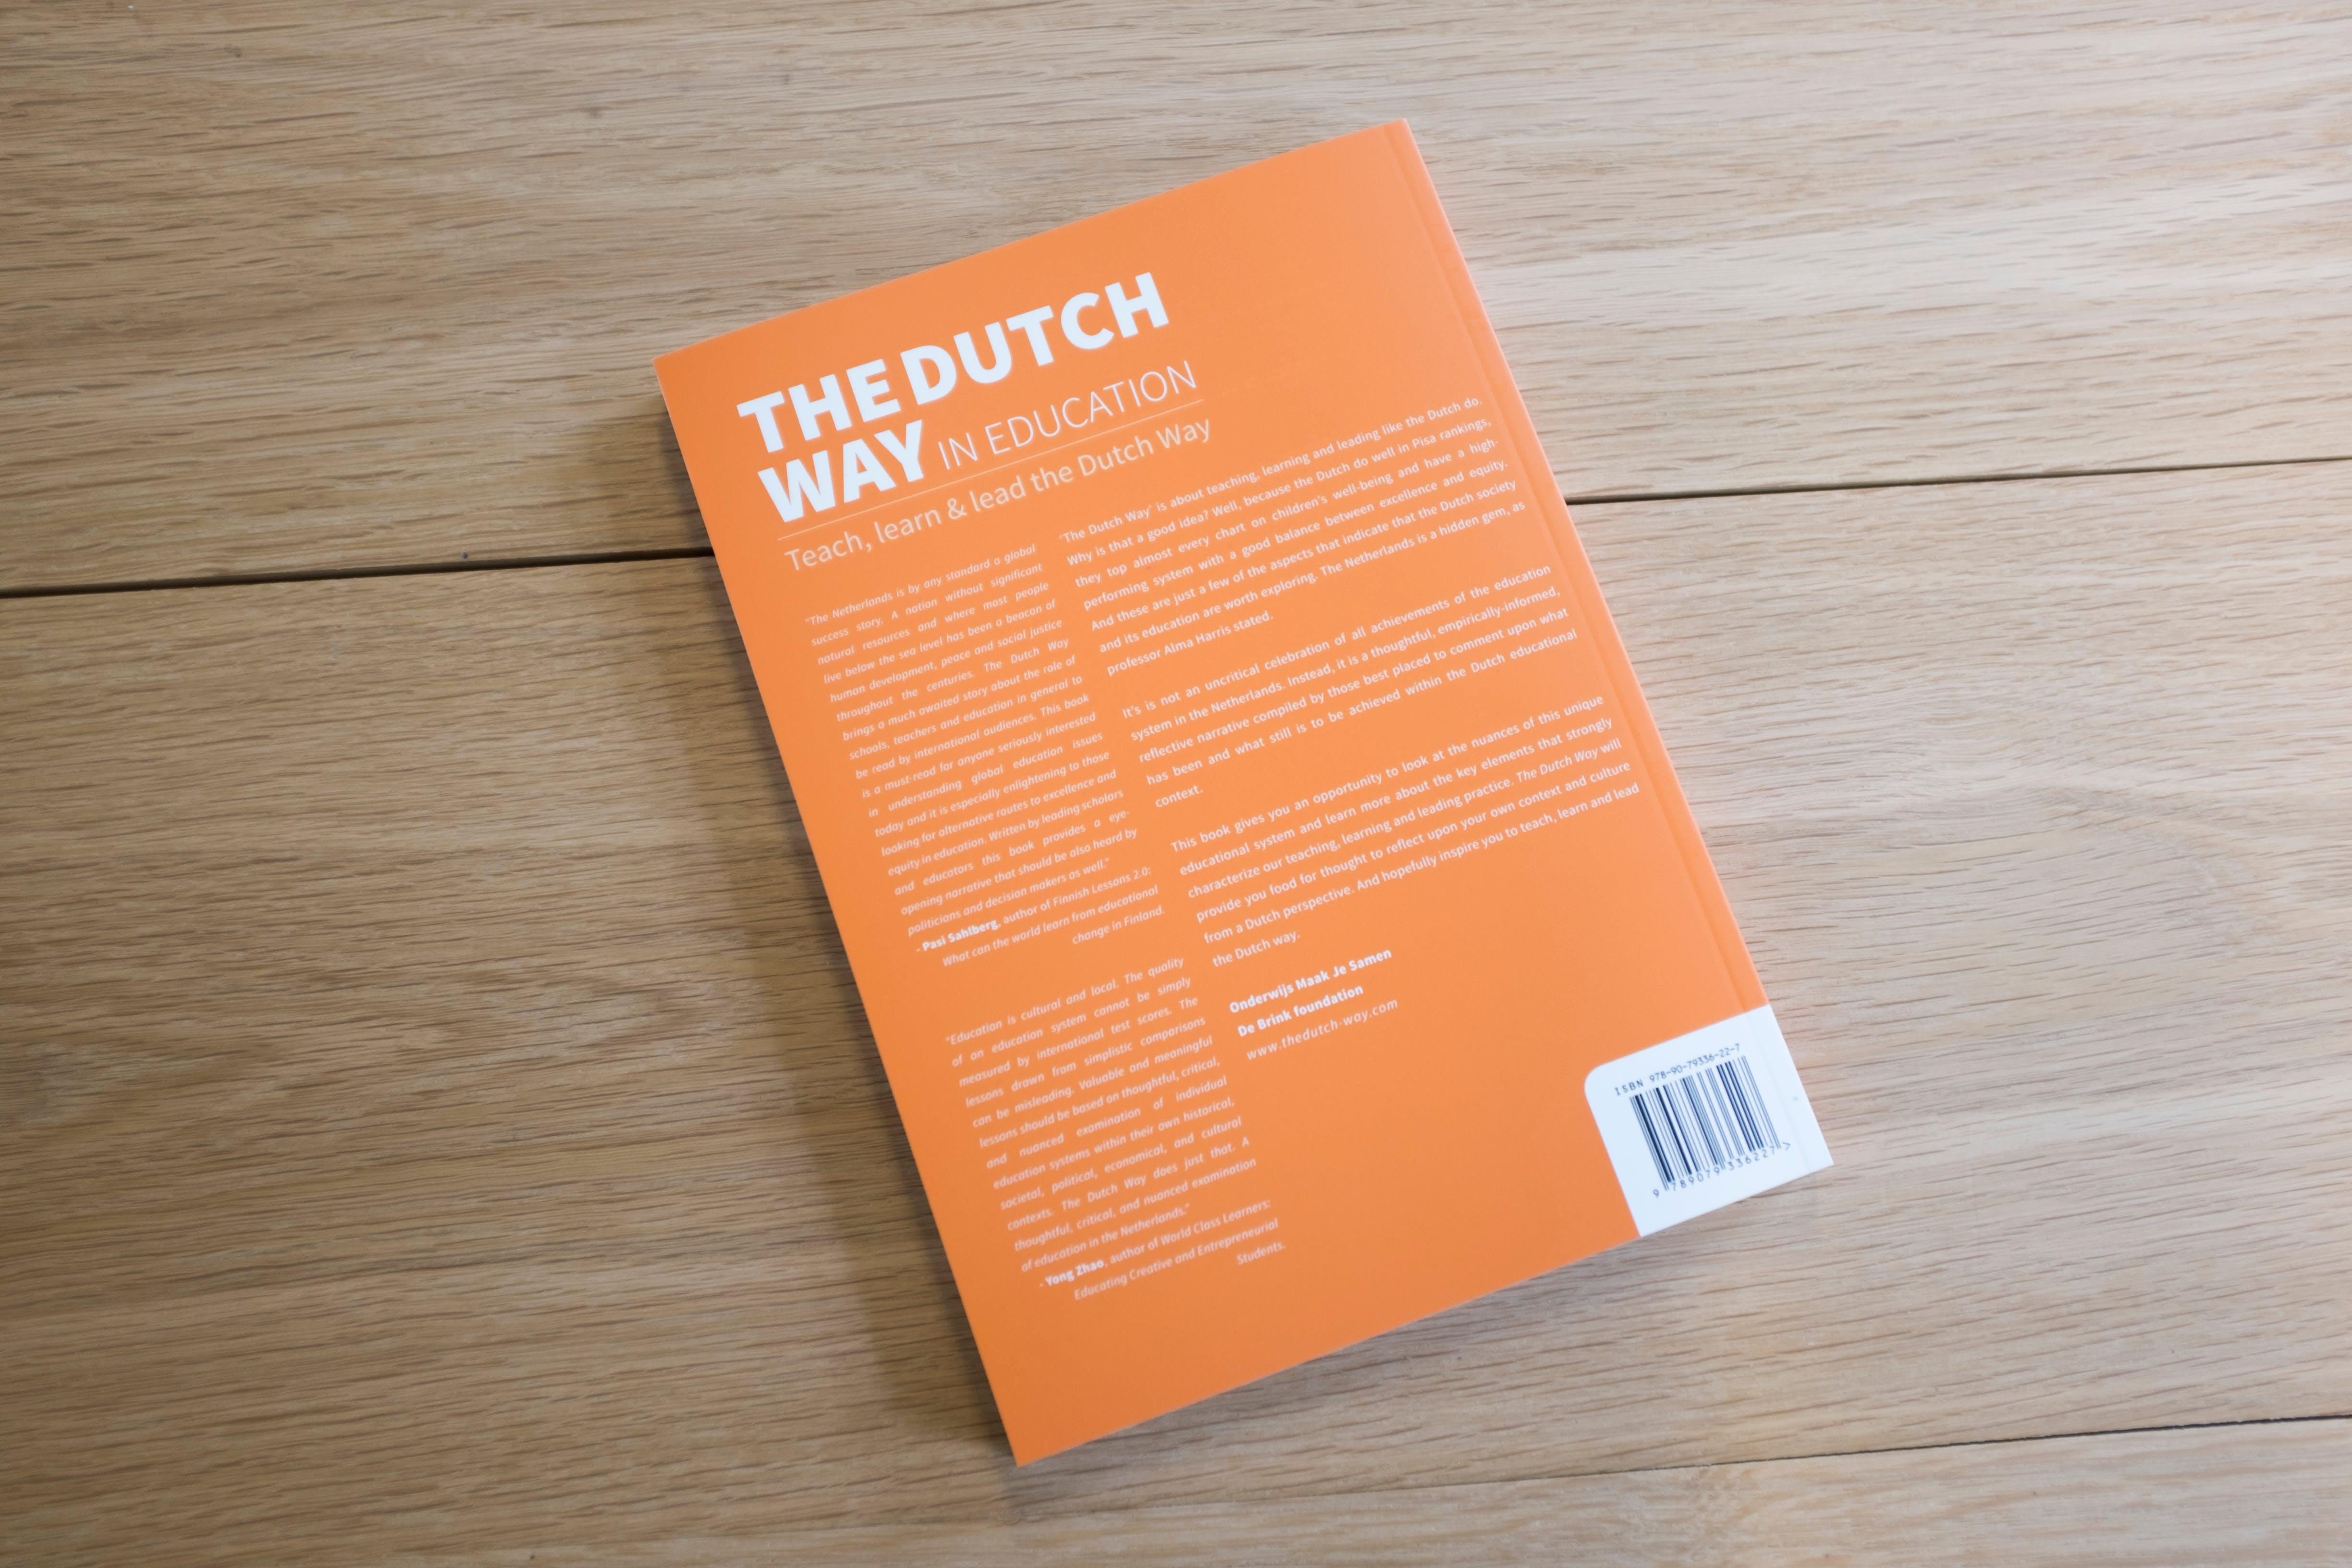 The Dutch Way in Education media 2